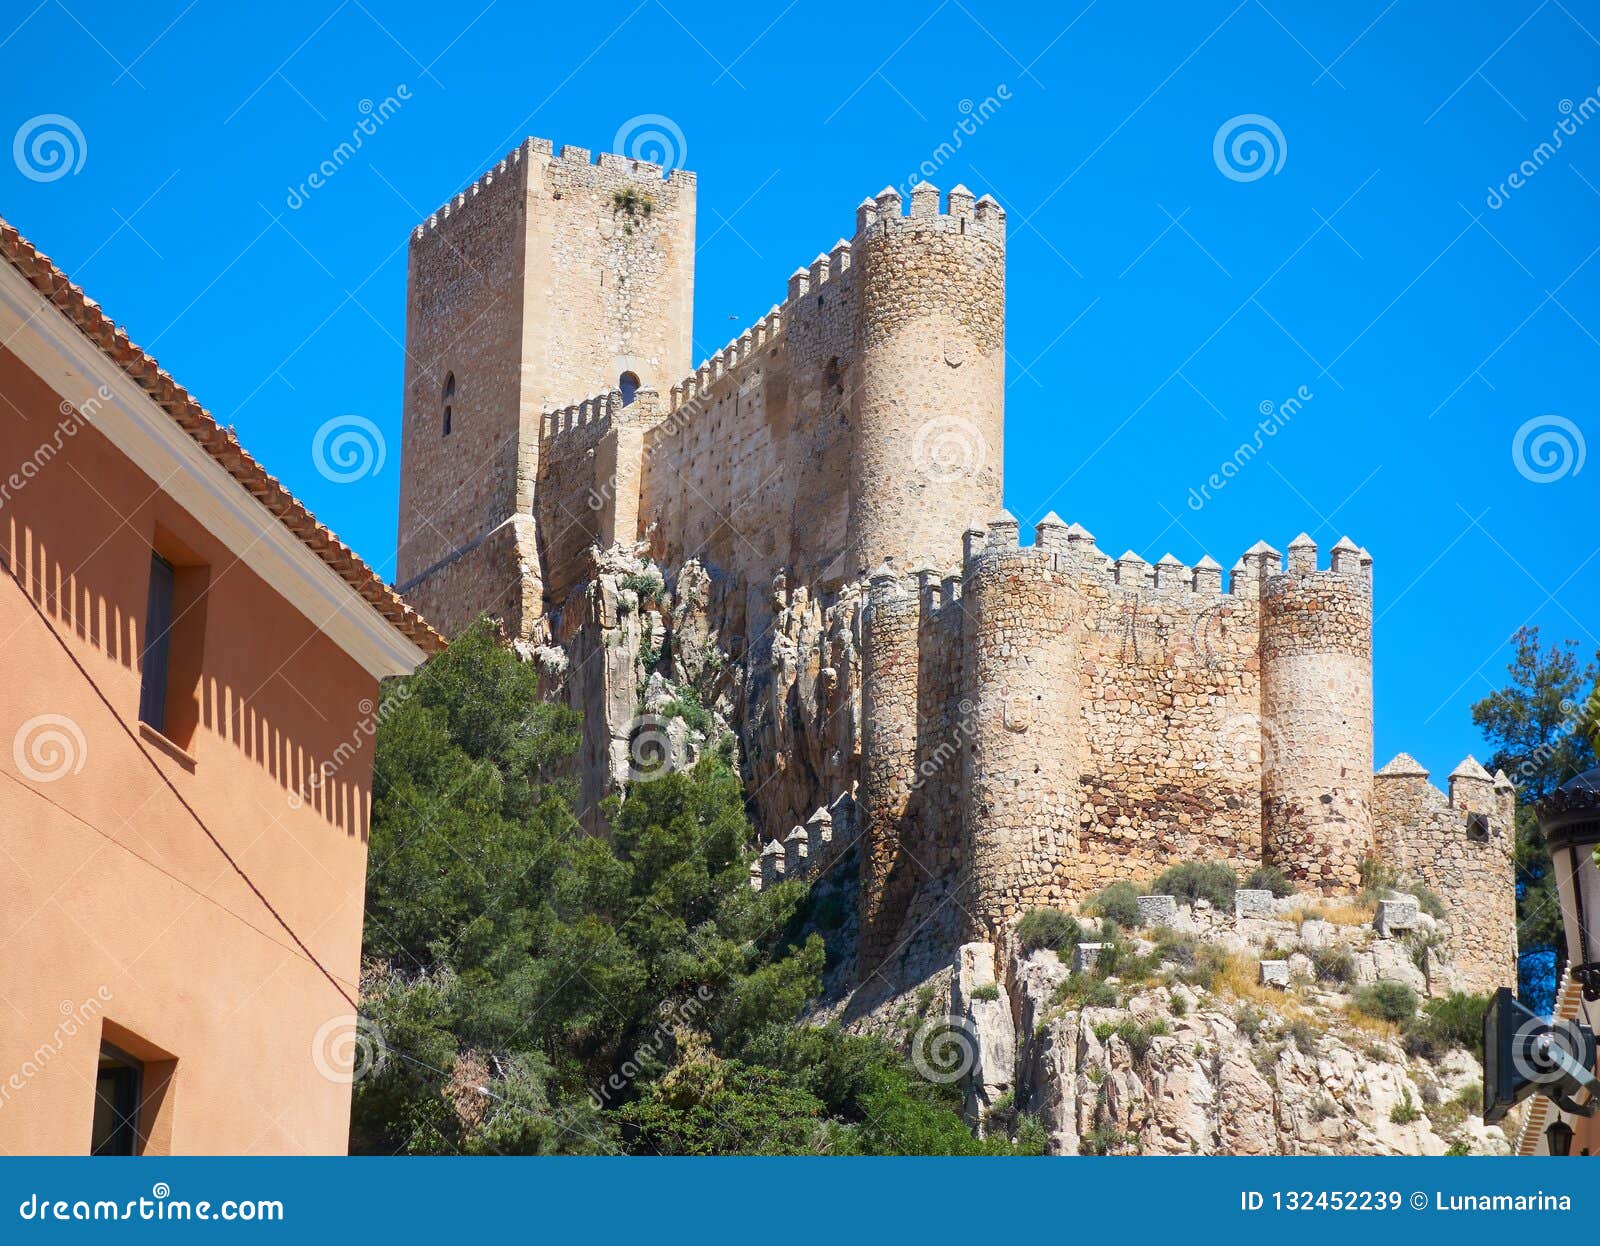 almansa castle in albacete of spain